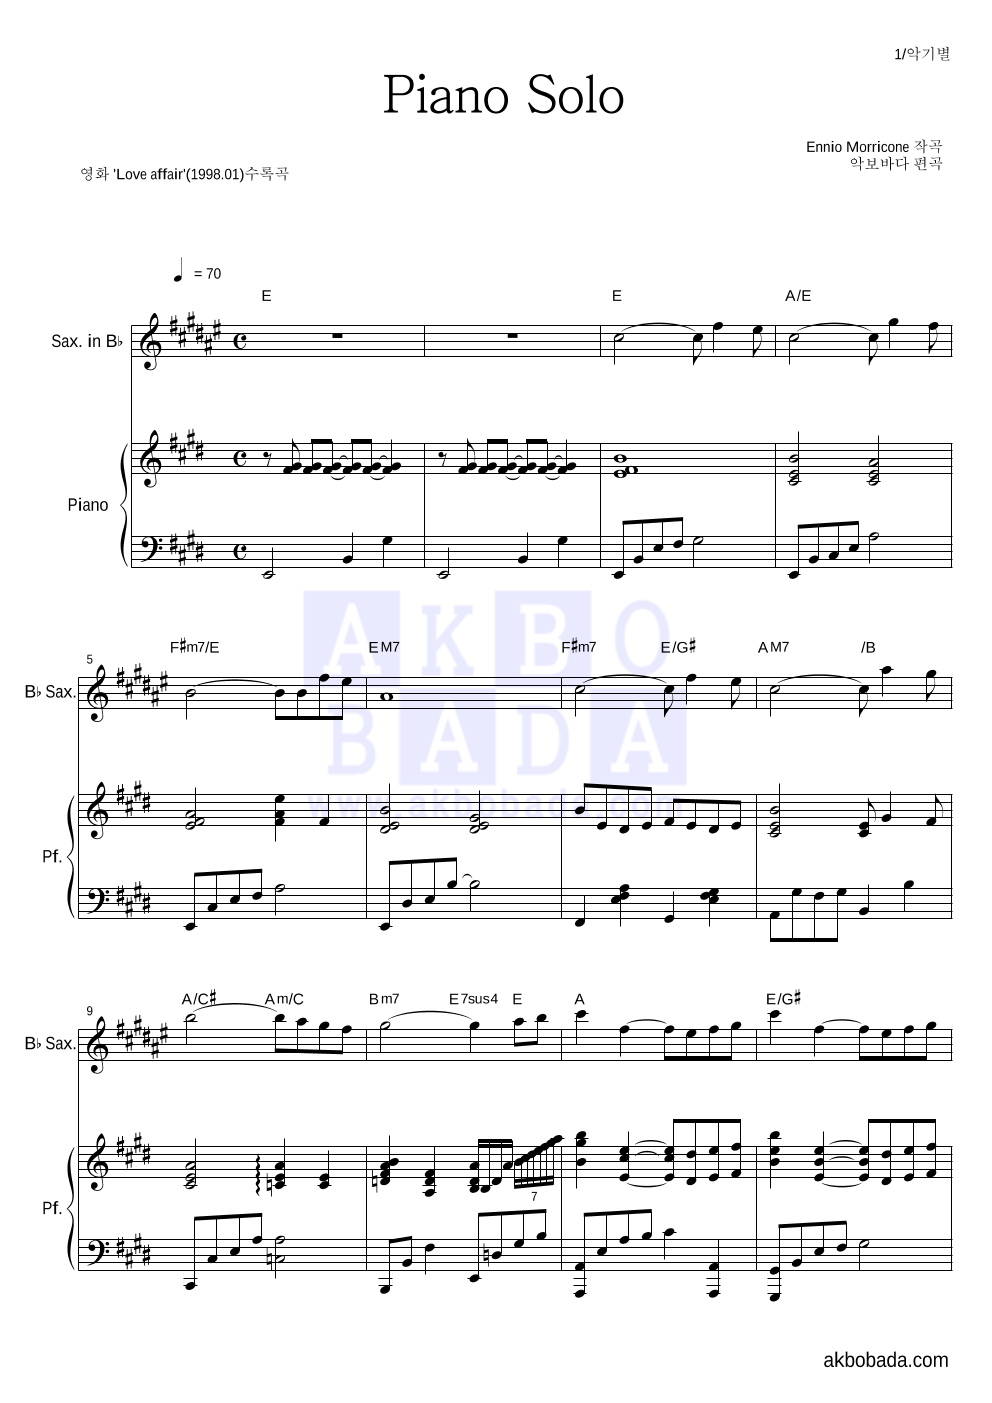 Ennio Morricone - Piano Solo Bb색소폰&피아노 악보 